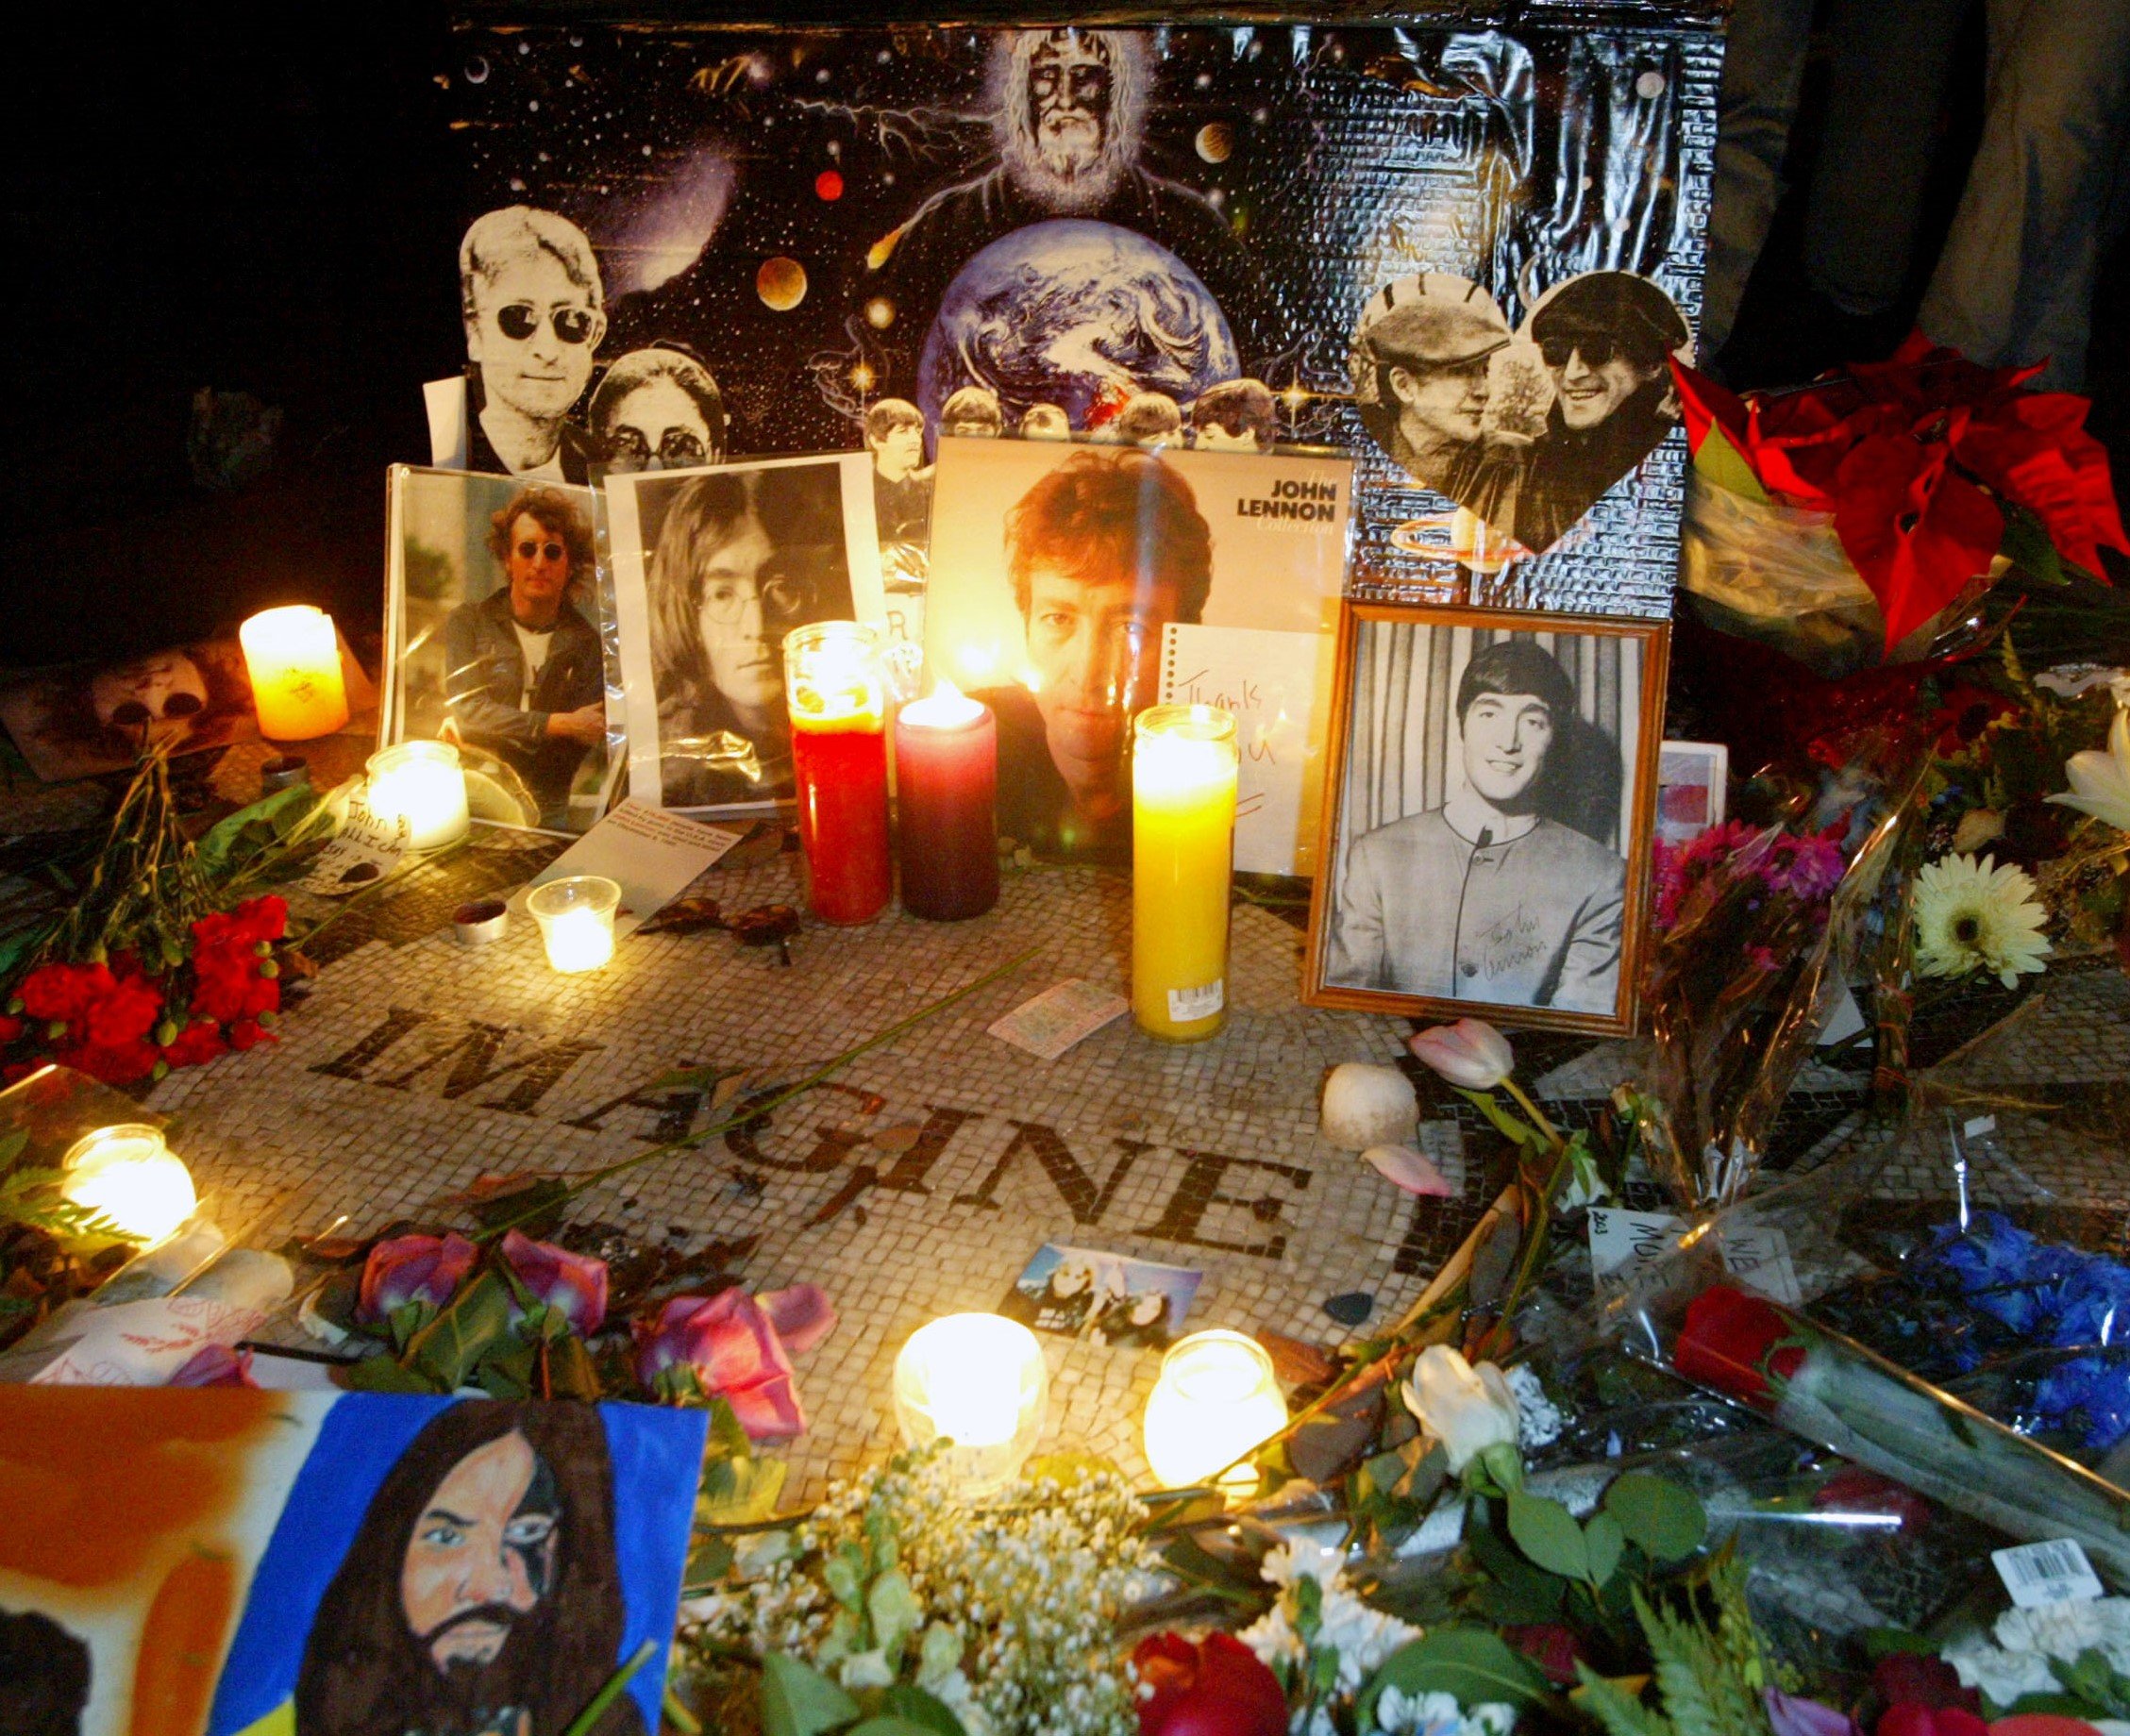 A memorial for John Lennon's death